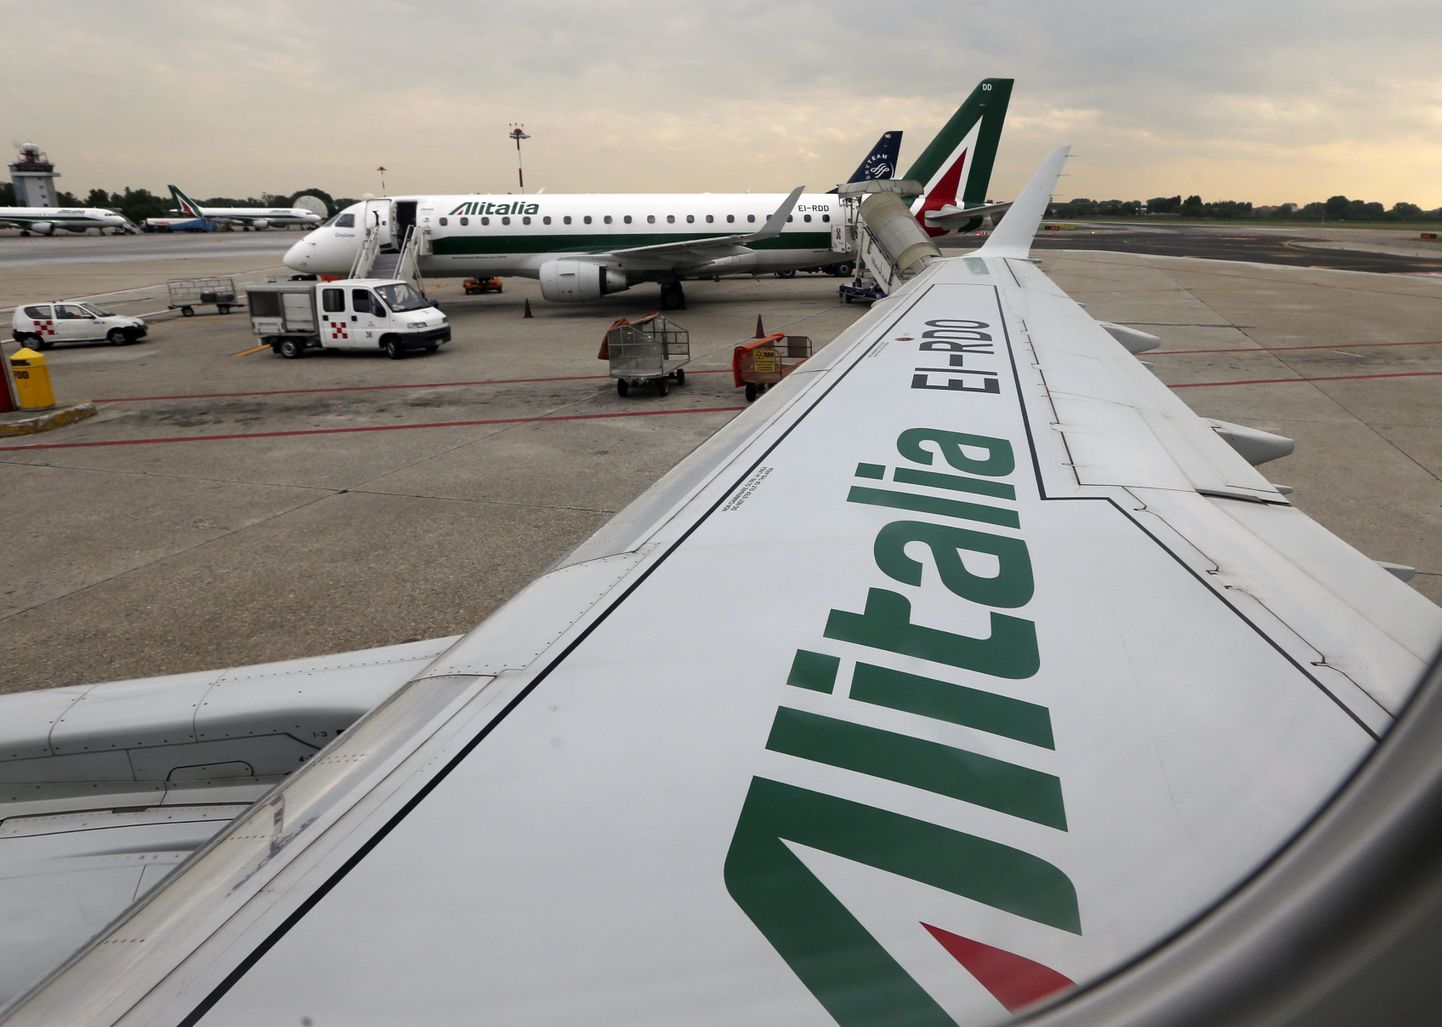 Alitalia lennuk